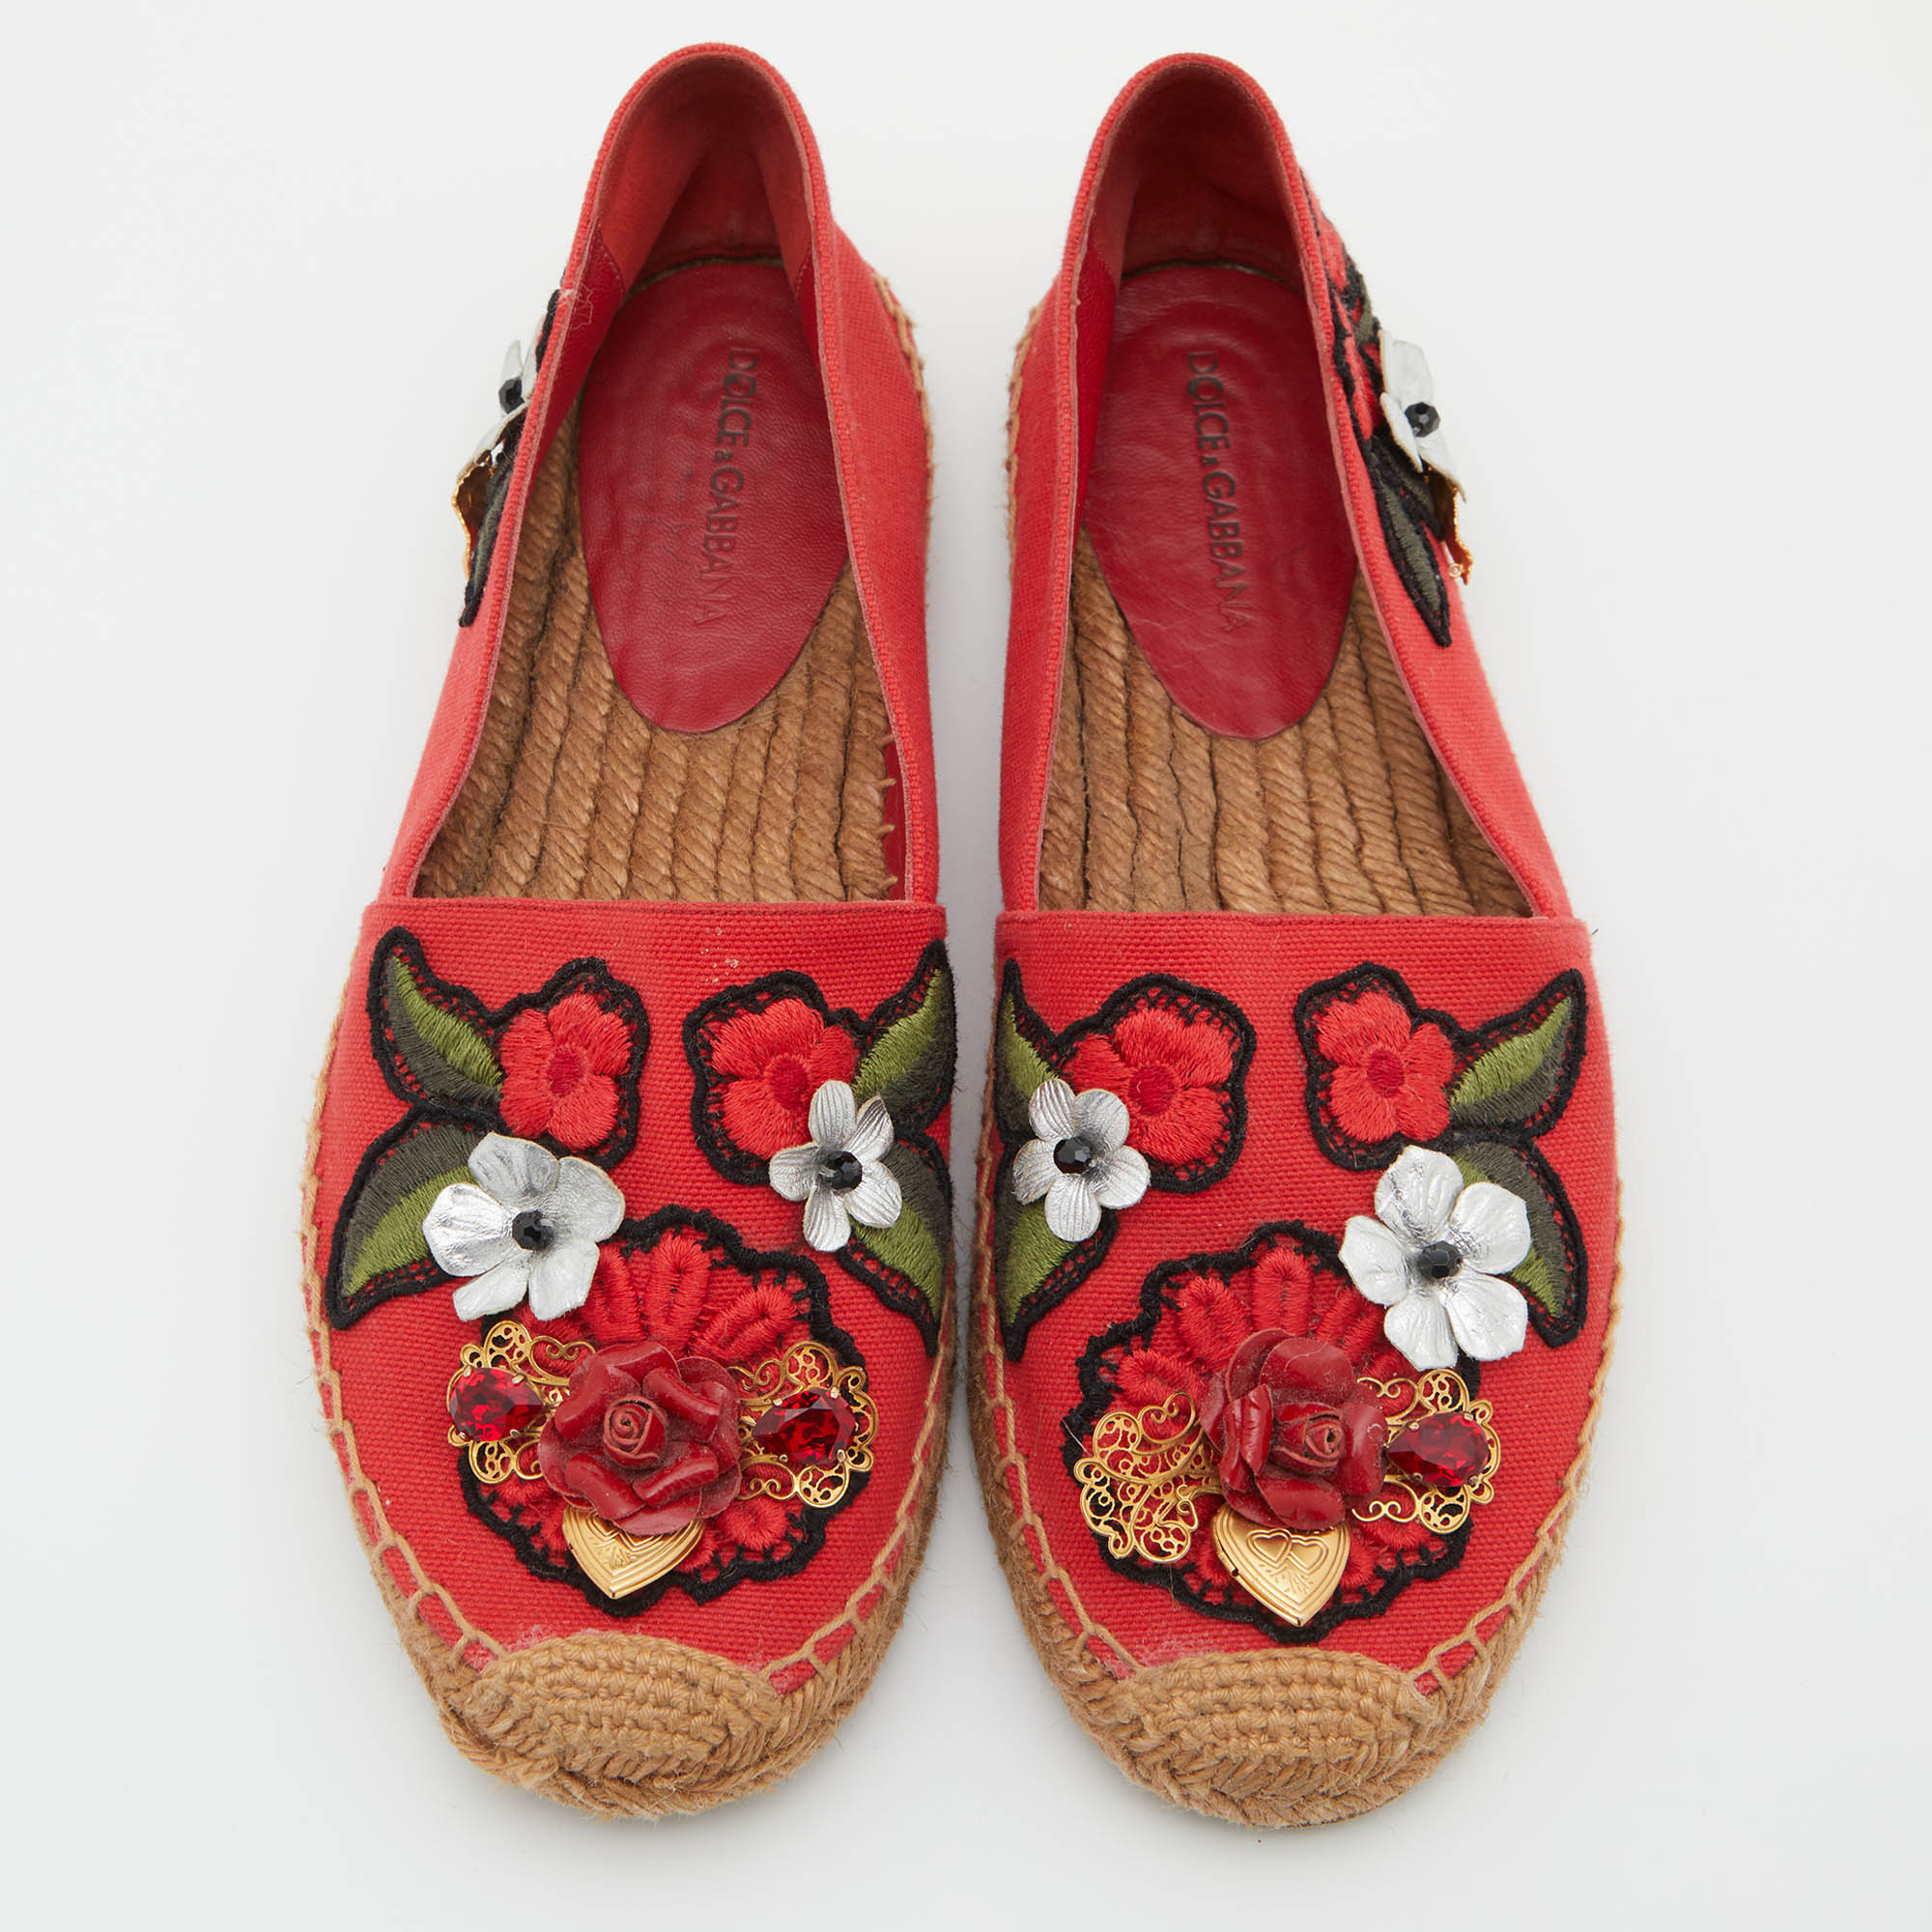 Dolce & Gabbana Red Canvas Locket Flower Jewel Embroidered Espadrille Flats Size 38